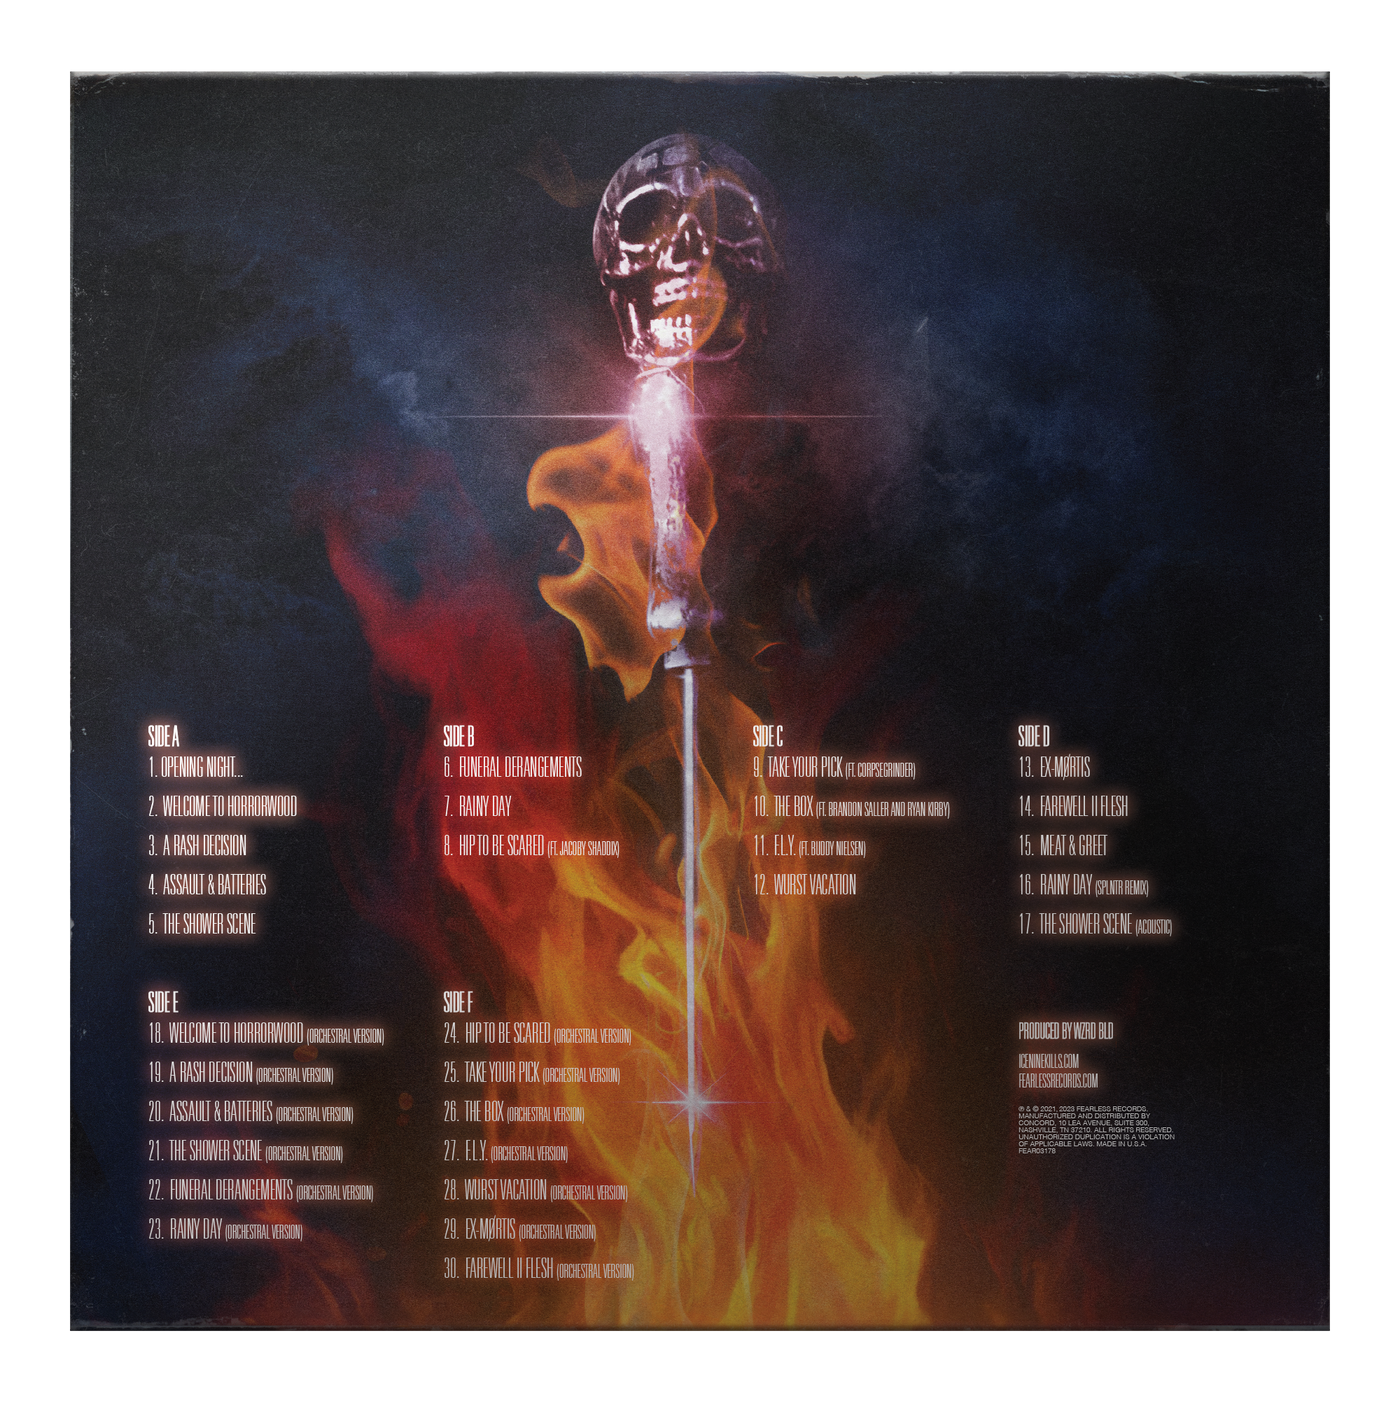 Welcome To Horrorwood: Under Fire (Deluxe Edition) Splatterwood Vinyl